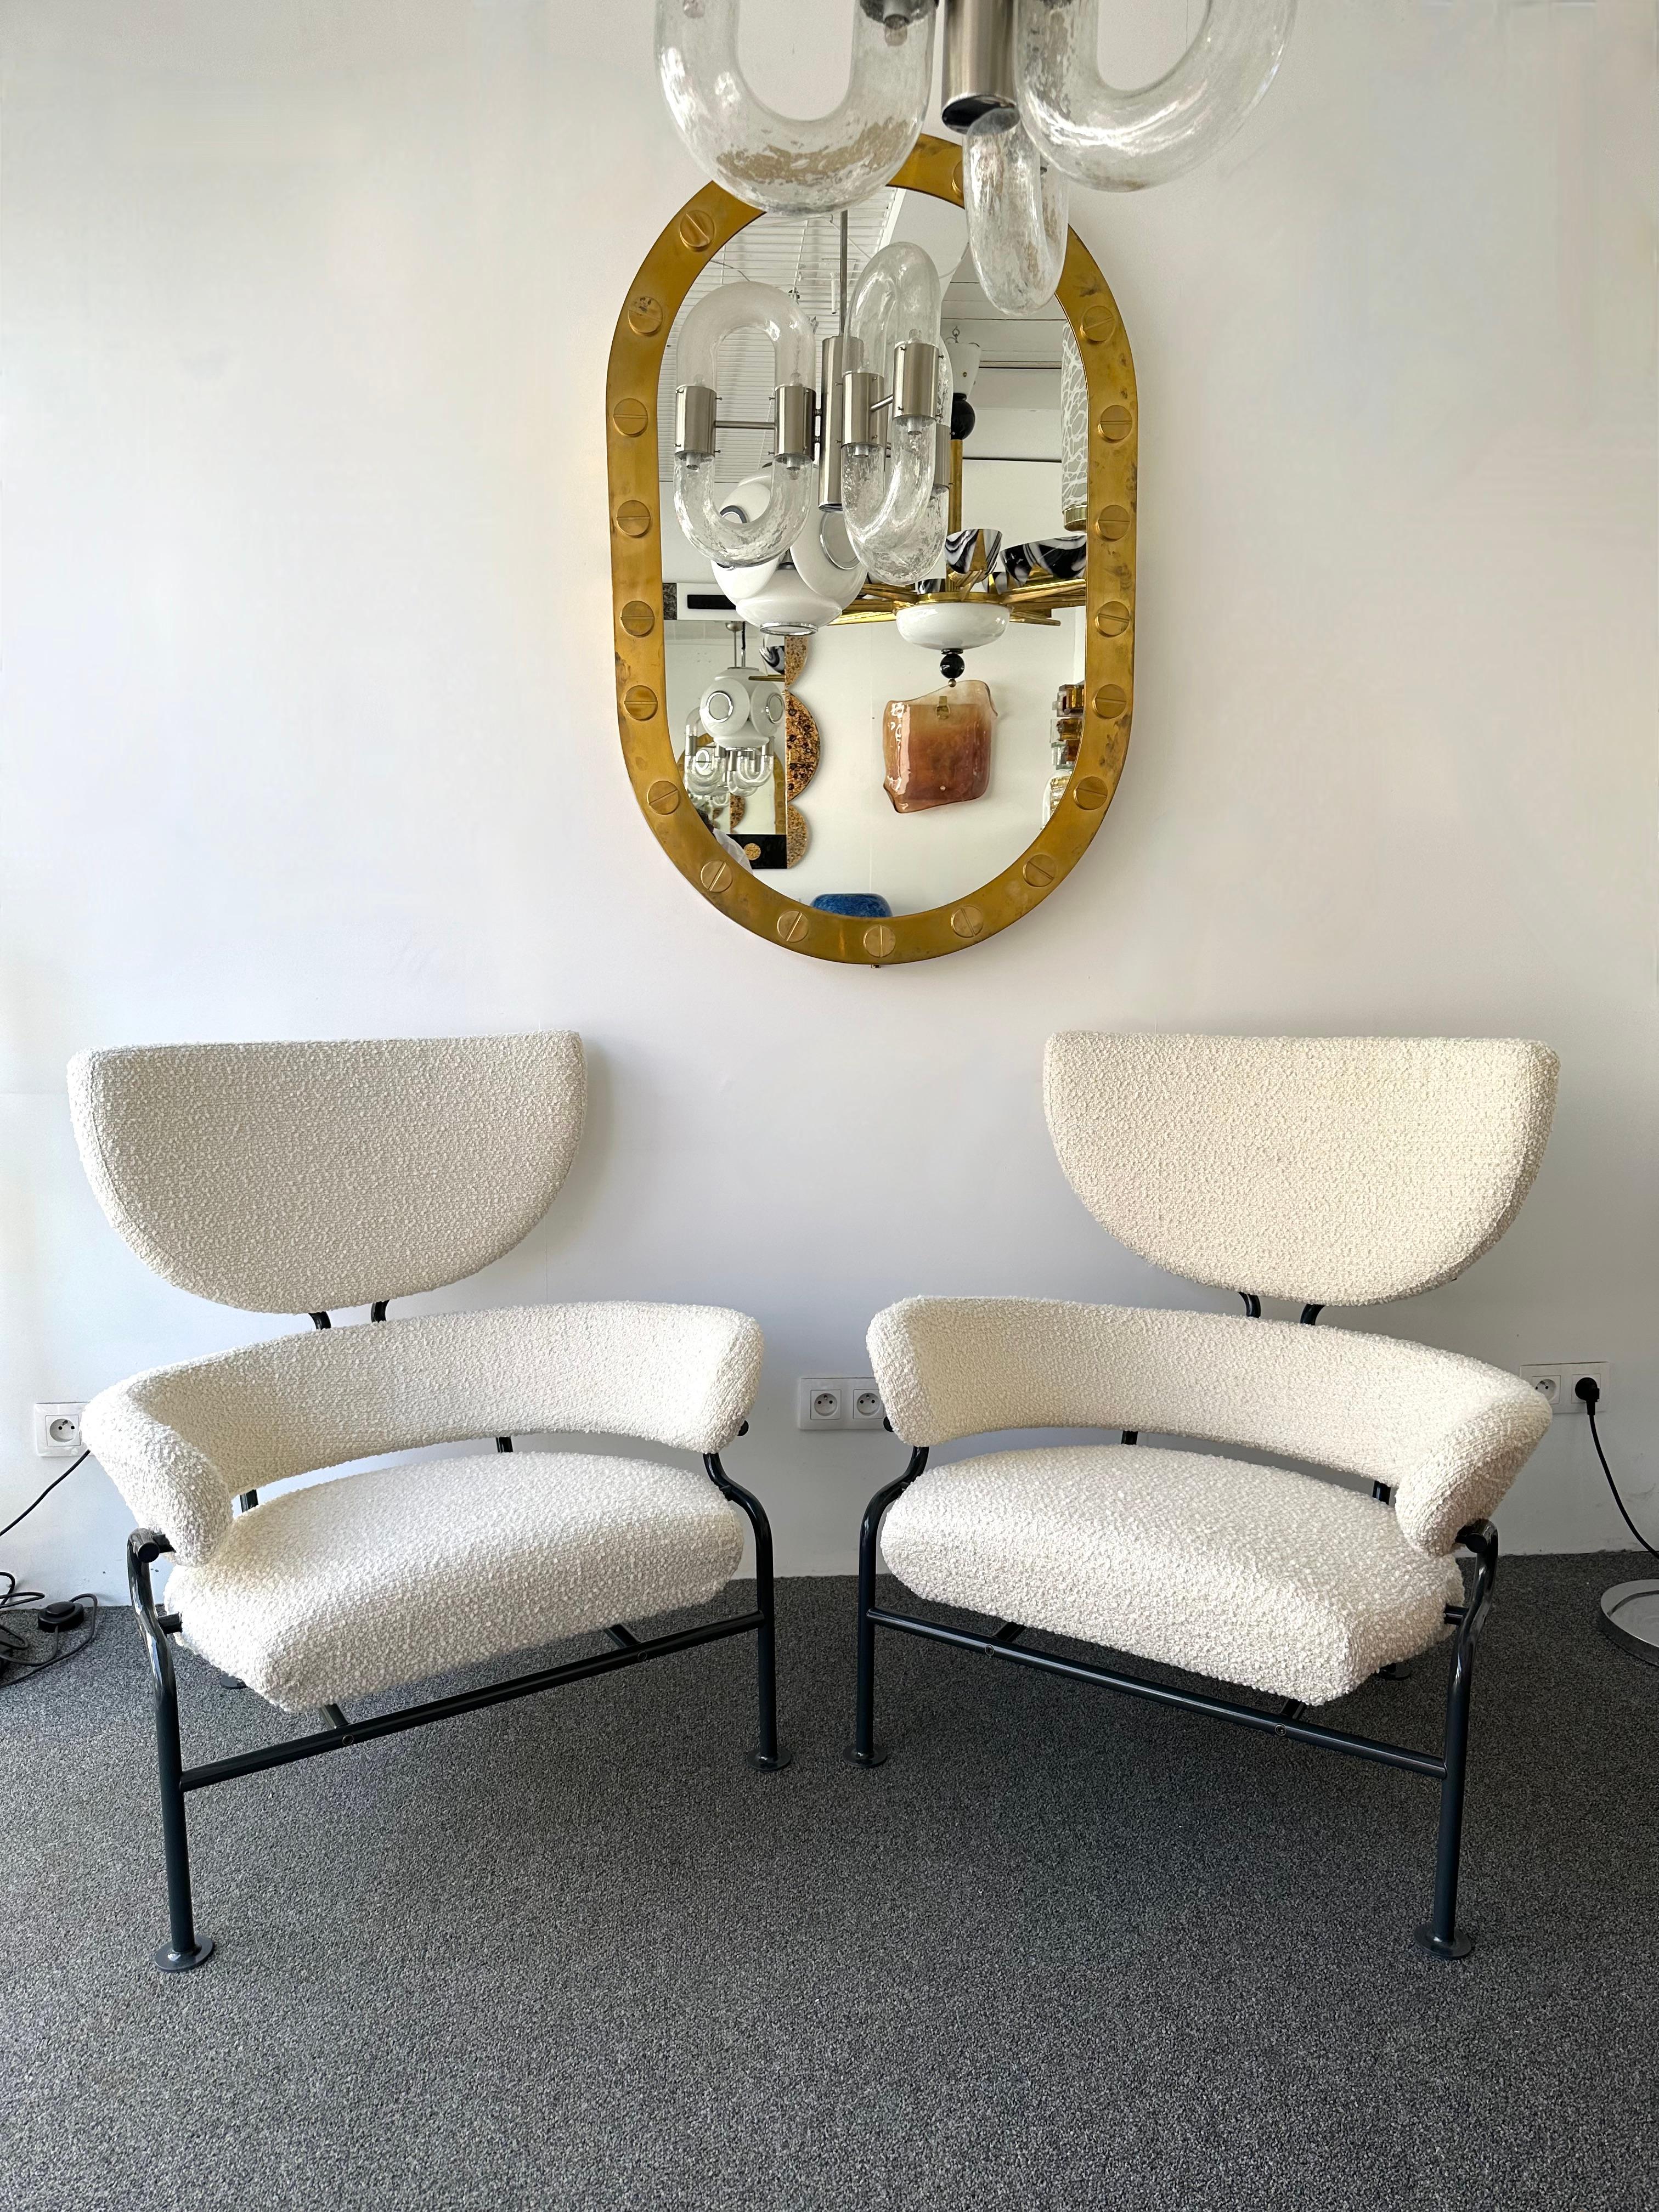 Mid-Century Modern space age Italian design pair of armchairs or lounge chairs by Franco Albini for the editor Poggi, recently reupholstered, minor fading on fabric. Famous design like Gio Ponti, Gianfranco Frattini, Cassina, Osvaldo Borsani, Joe